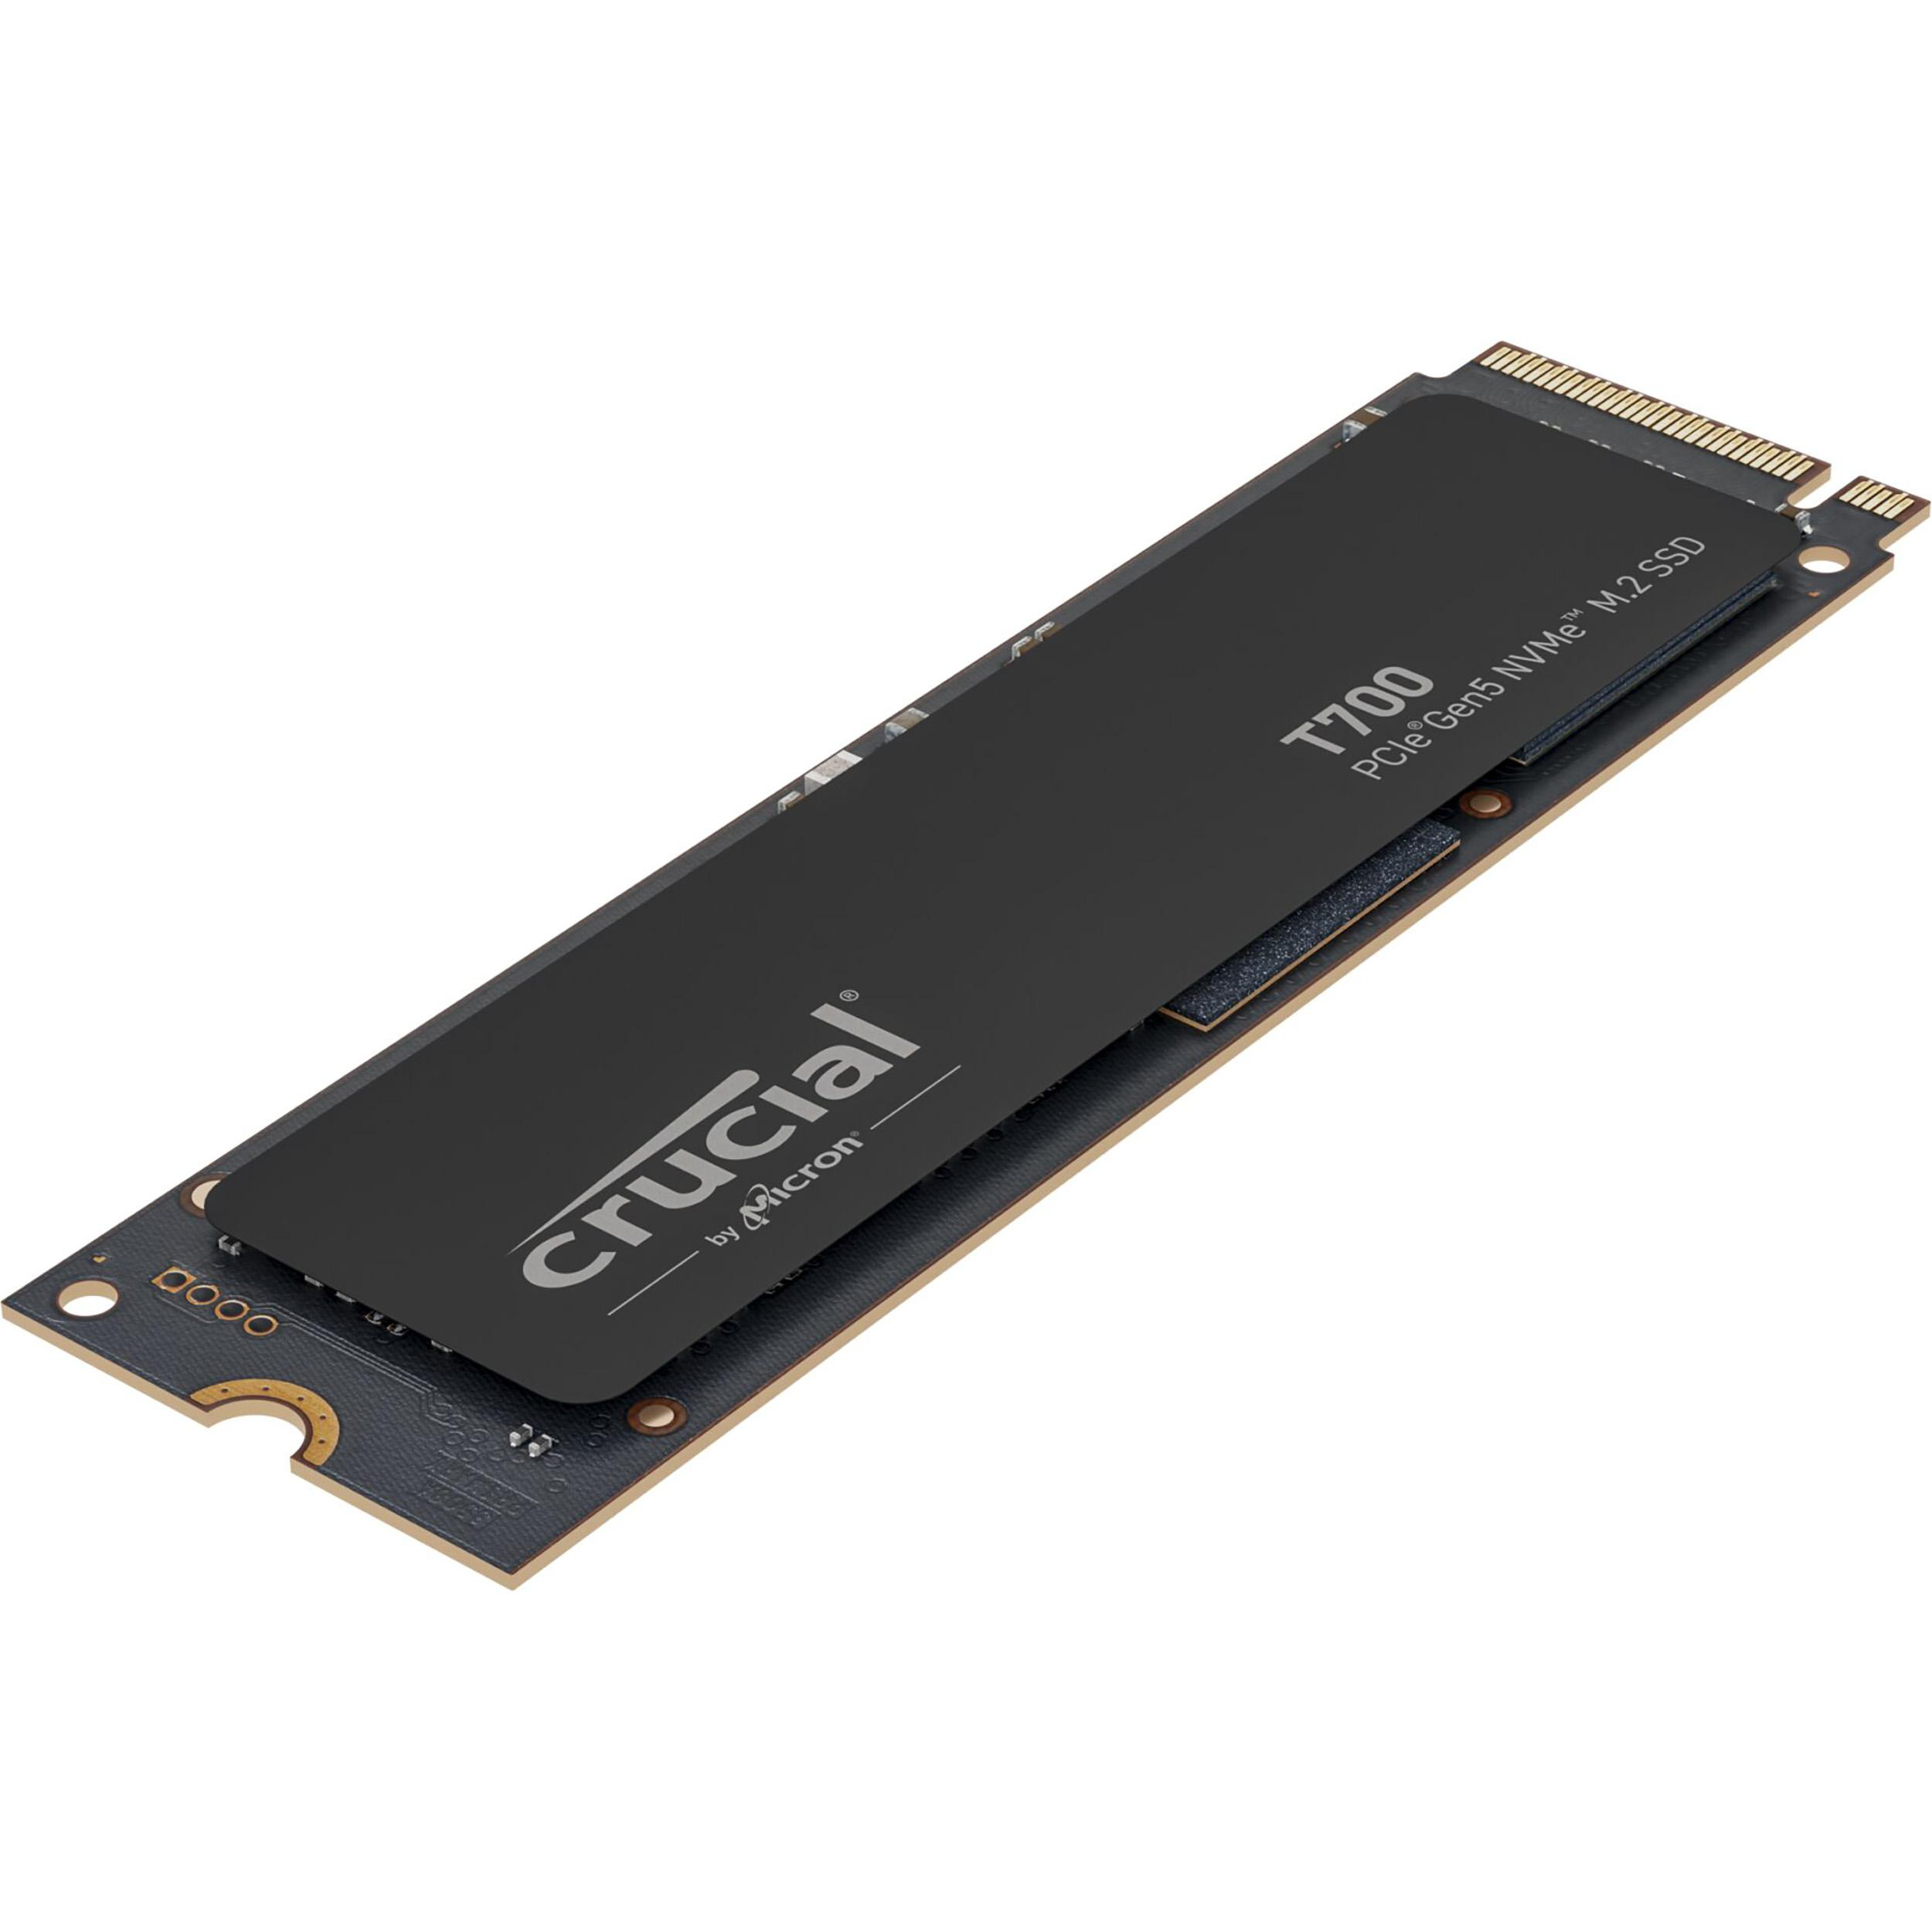 CRUCIAL T700 4TB PCIe Gen5 4 NVMe M.2, SSD, intern SSD TB